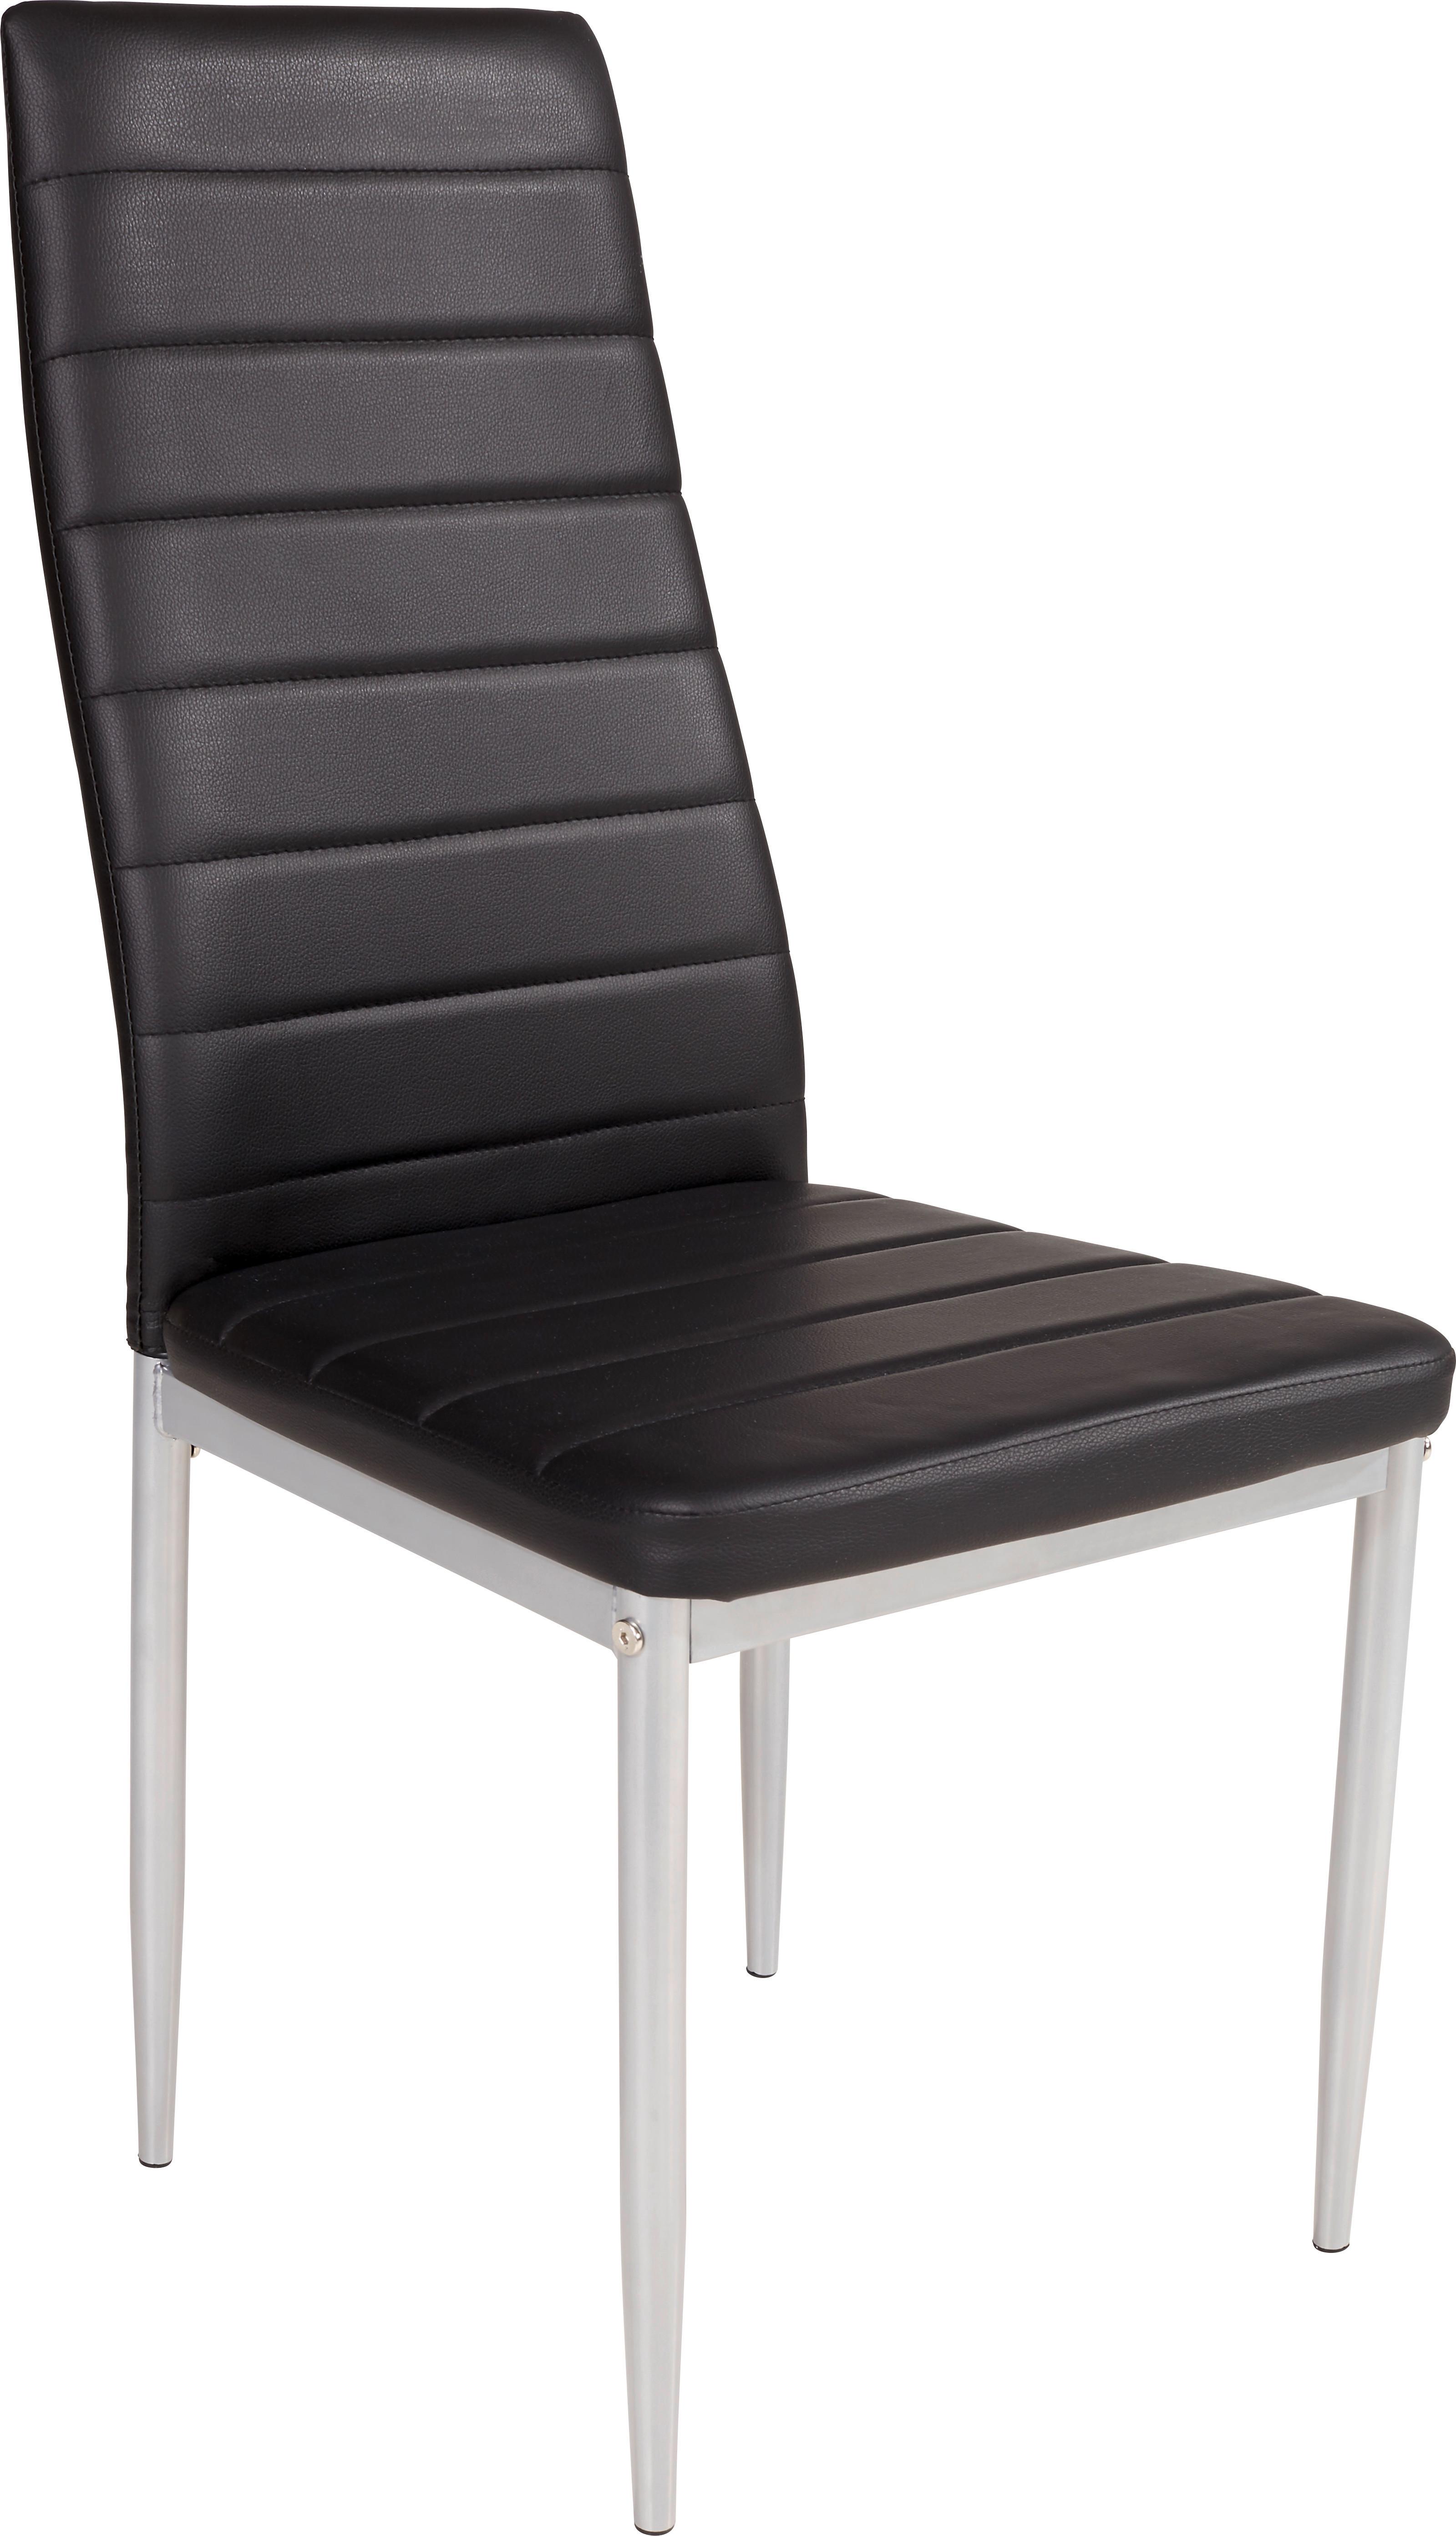 Židle Franzi    *cenový Trhák* - černá/barvy hliníku, Konvenční, kov/textil (42/97/53cm)